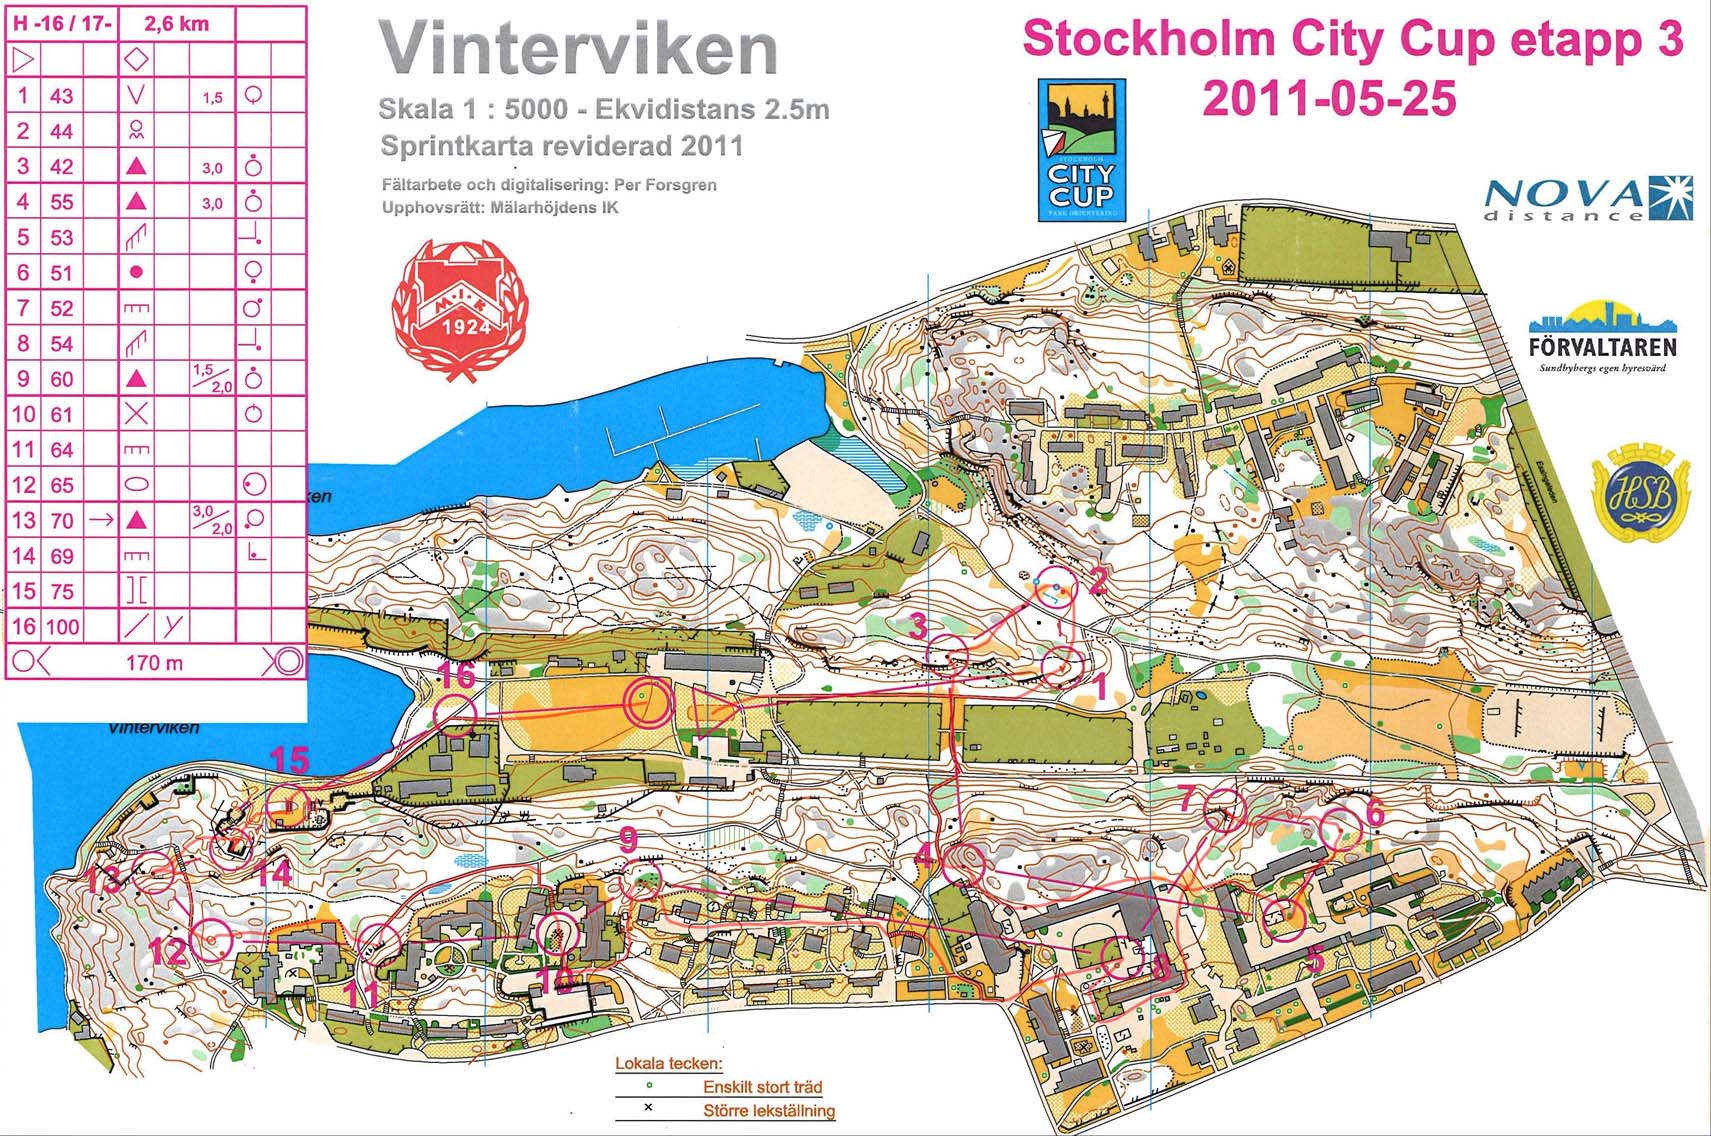 Stockholm City Cup 3 (2011-05-25)